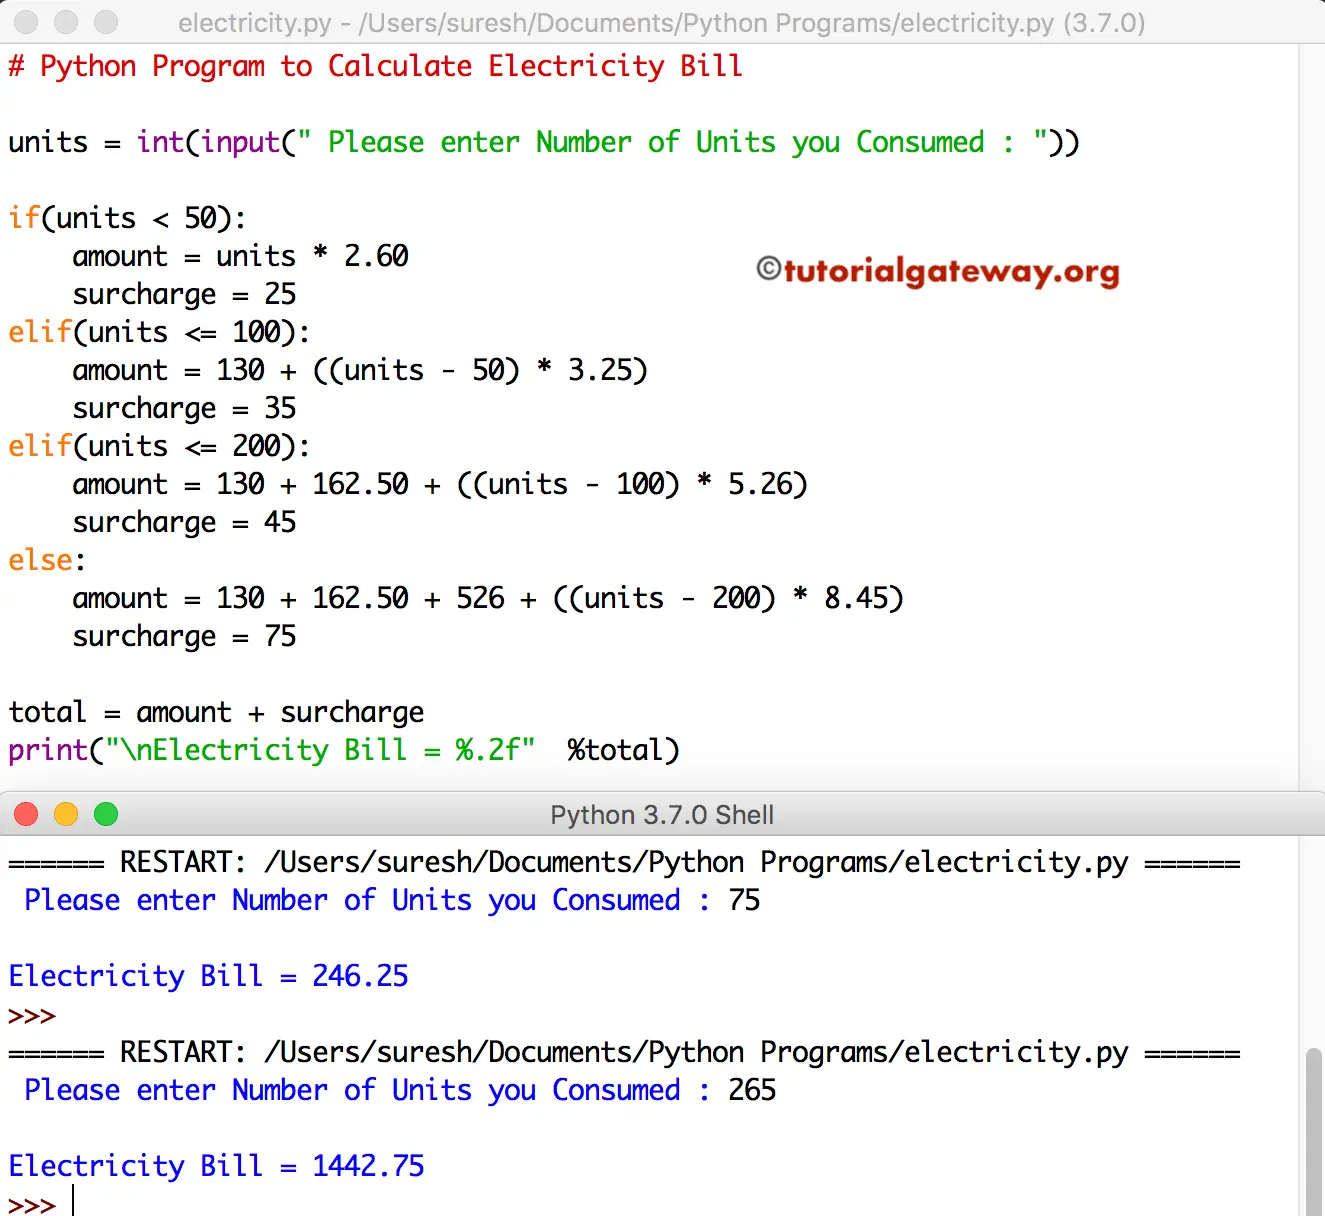 Python Program to Calculate Electricity Bill